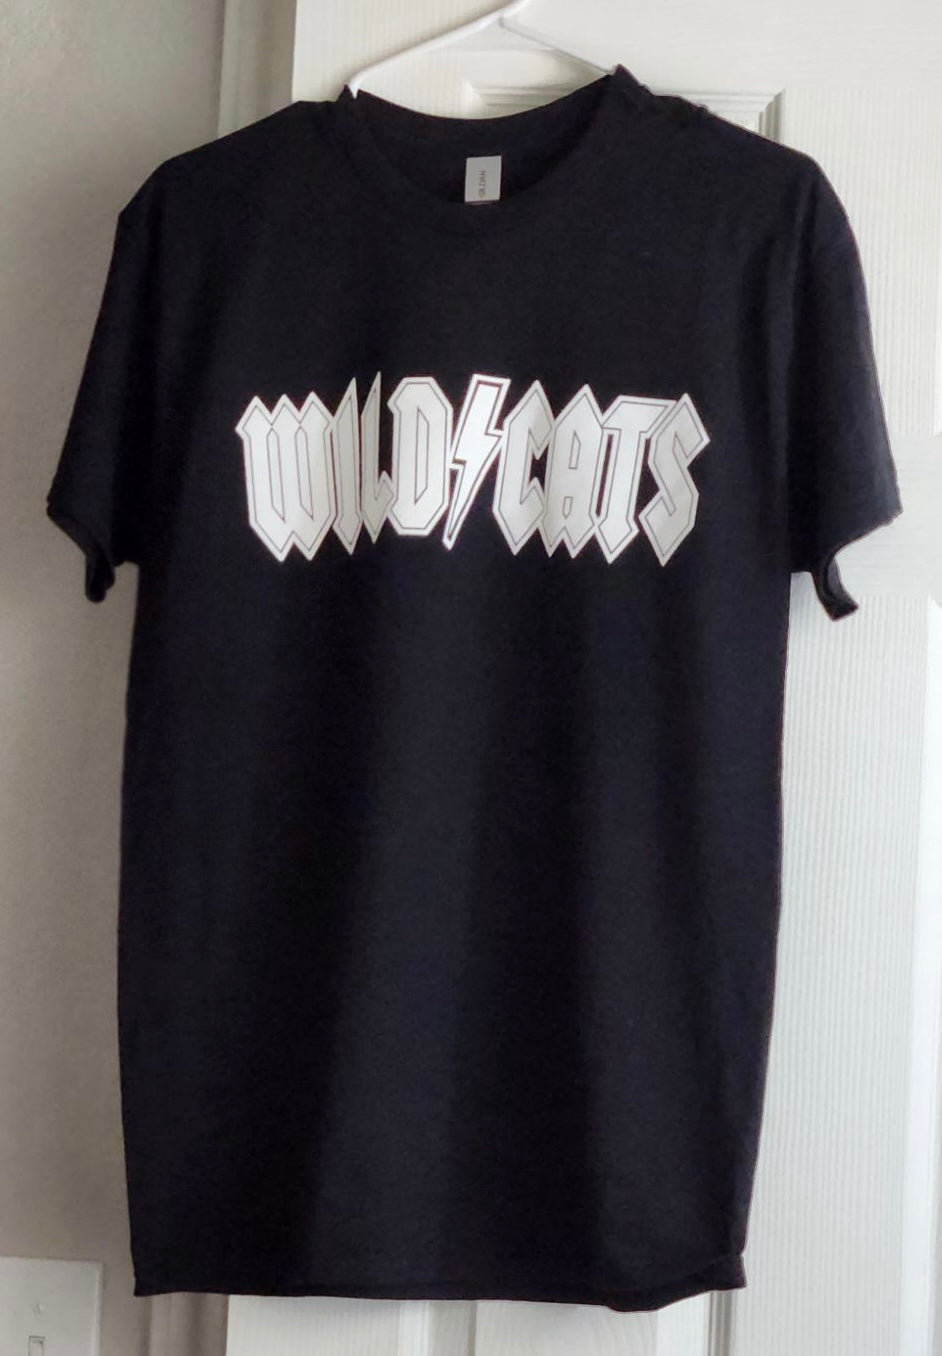 Youth Wildcat Black AC/DC shirt